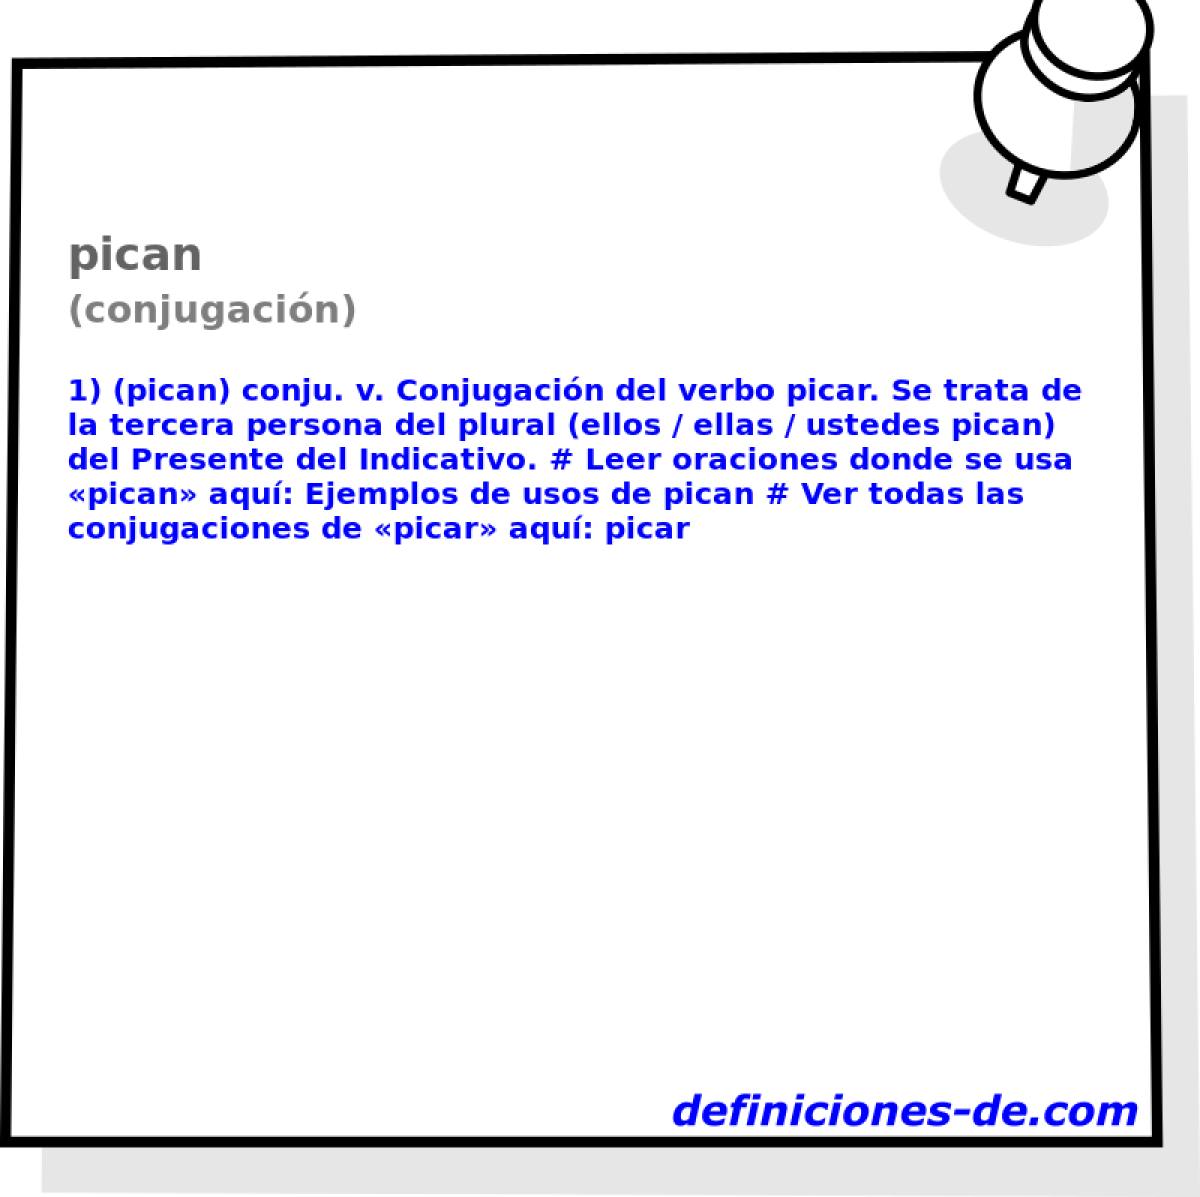 pican (conjugacin)